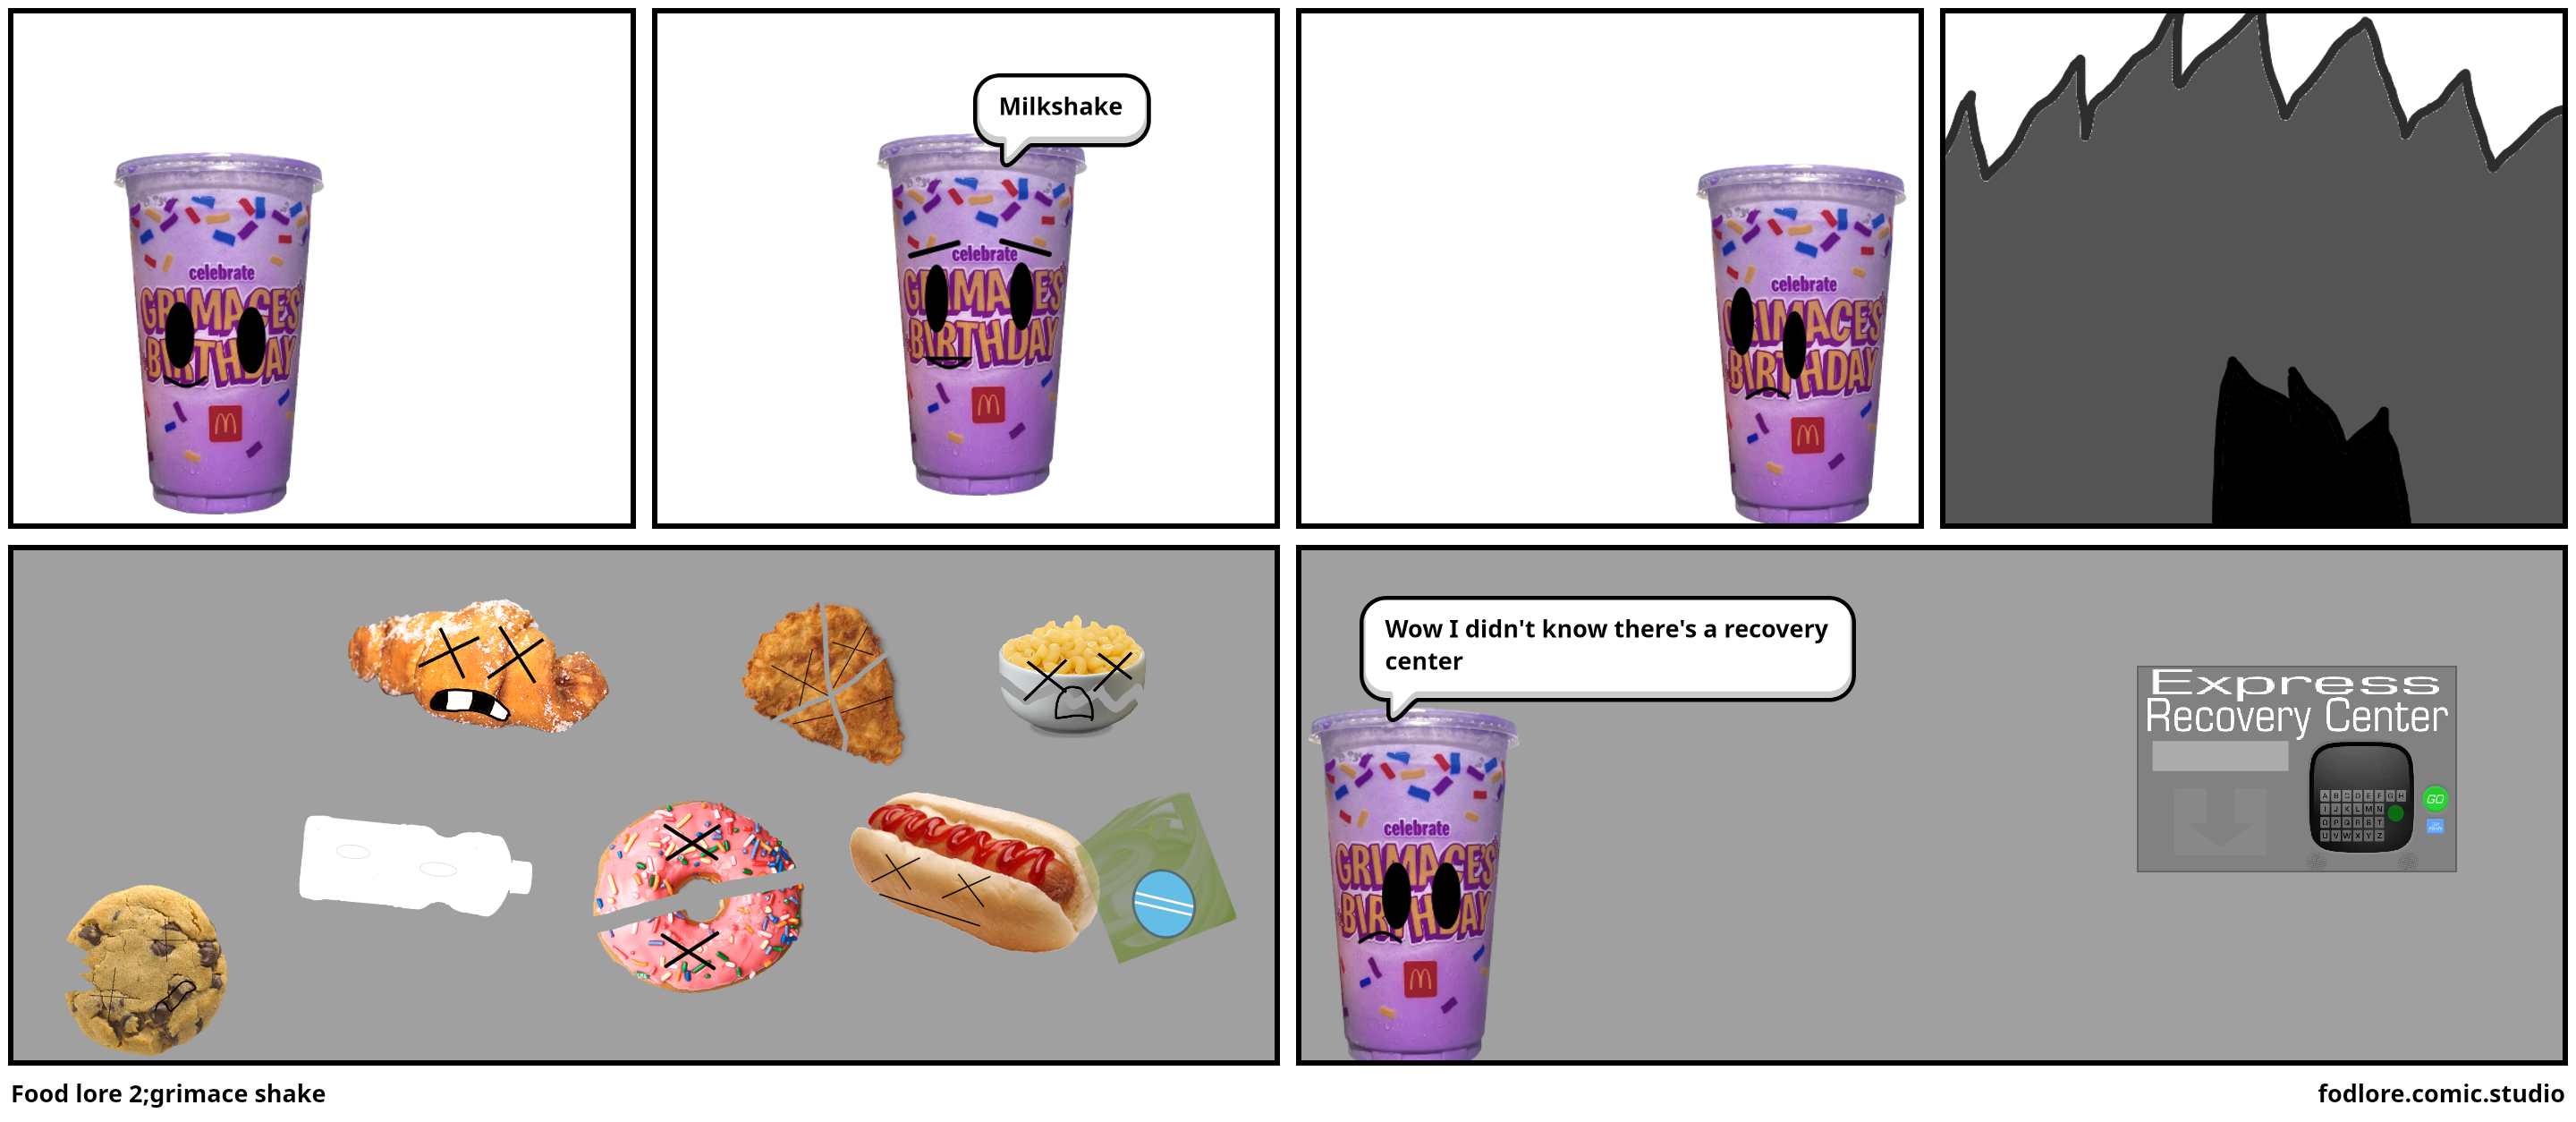 Food lore 2;grimace shake